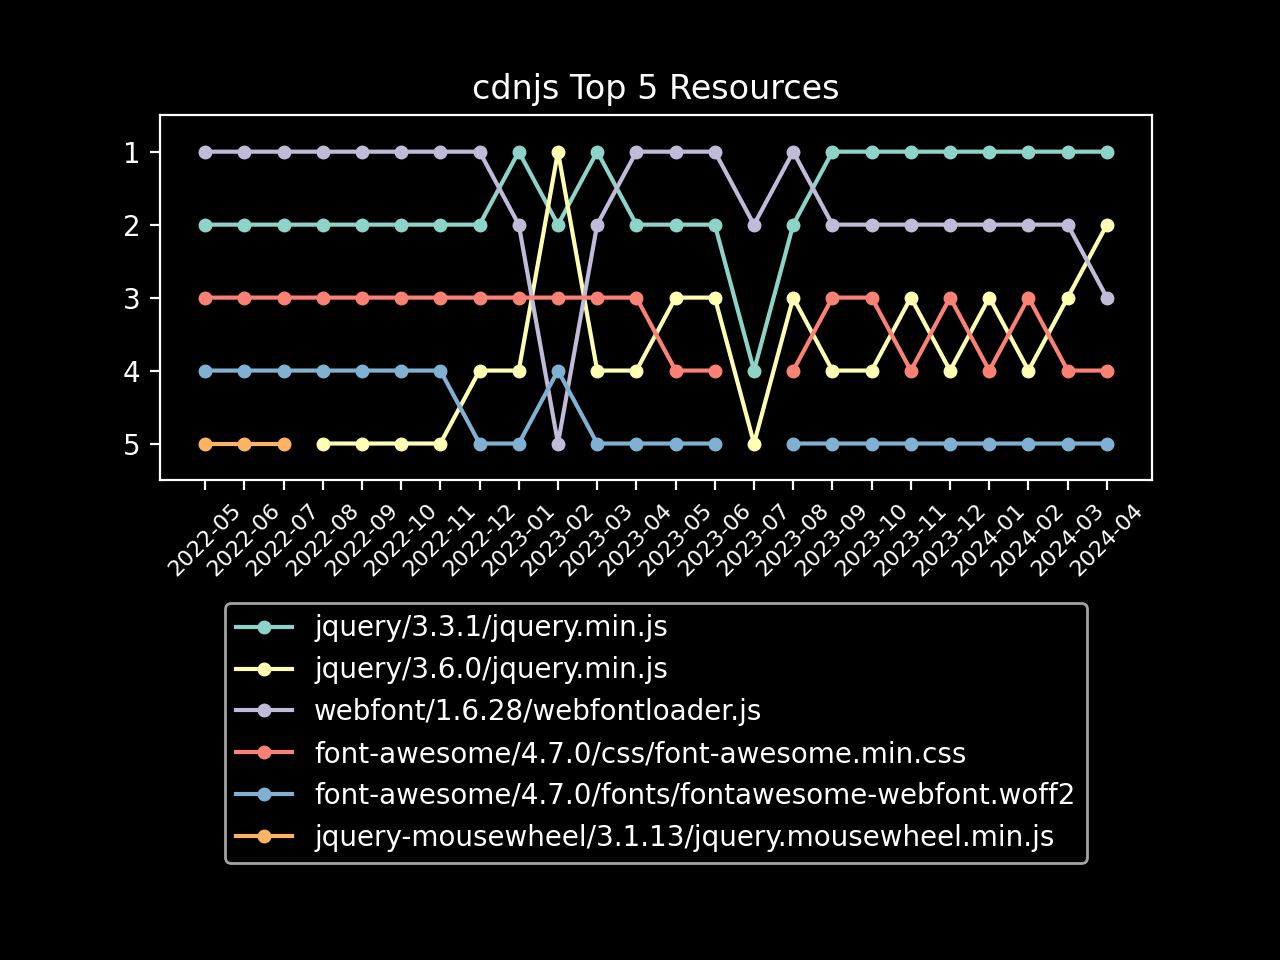 cdnjs top 5 resources graph